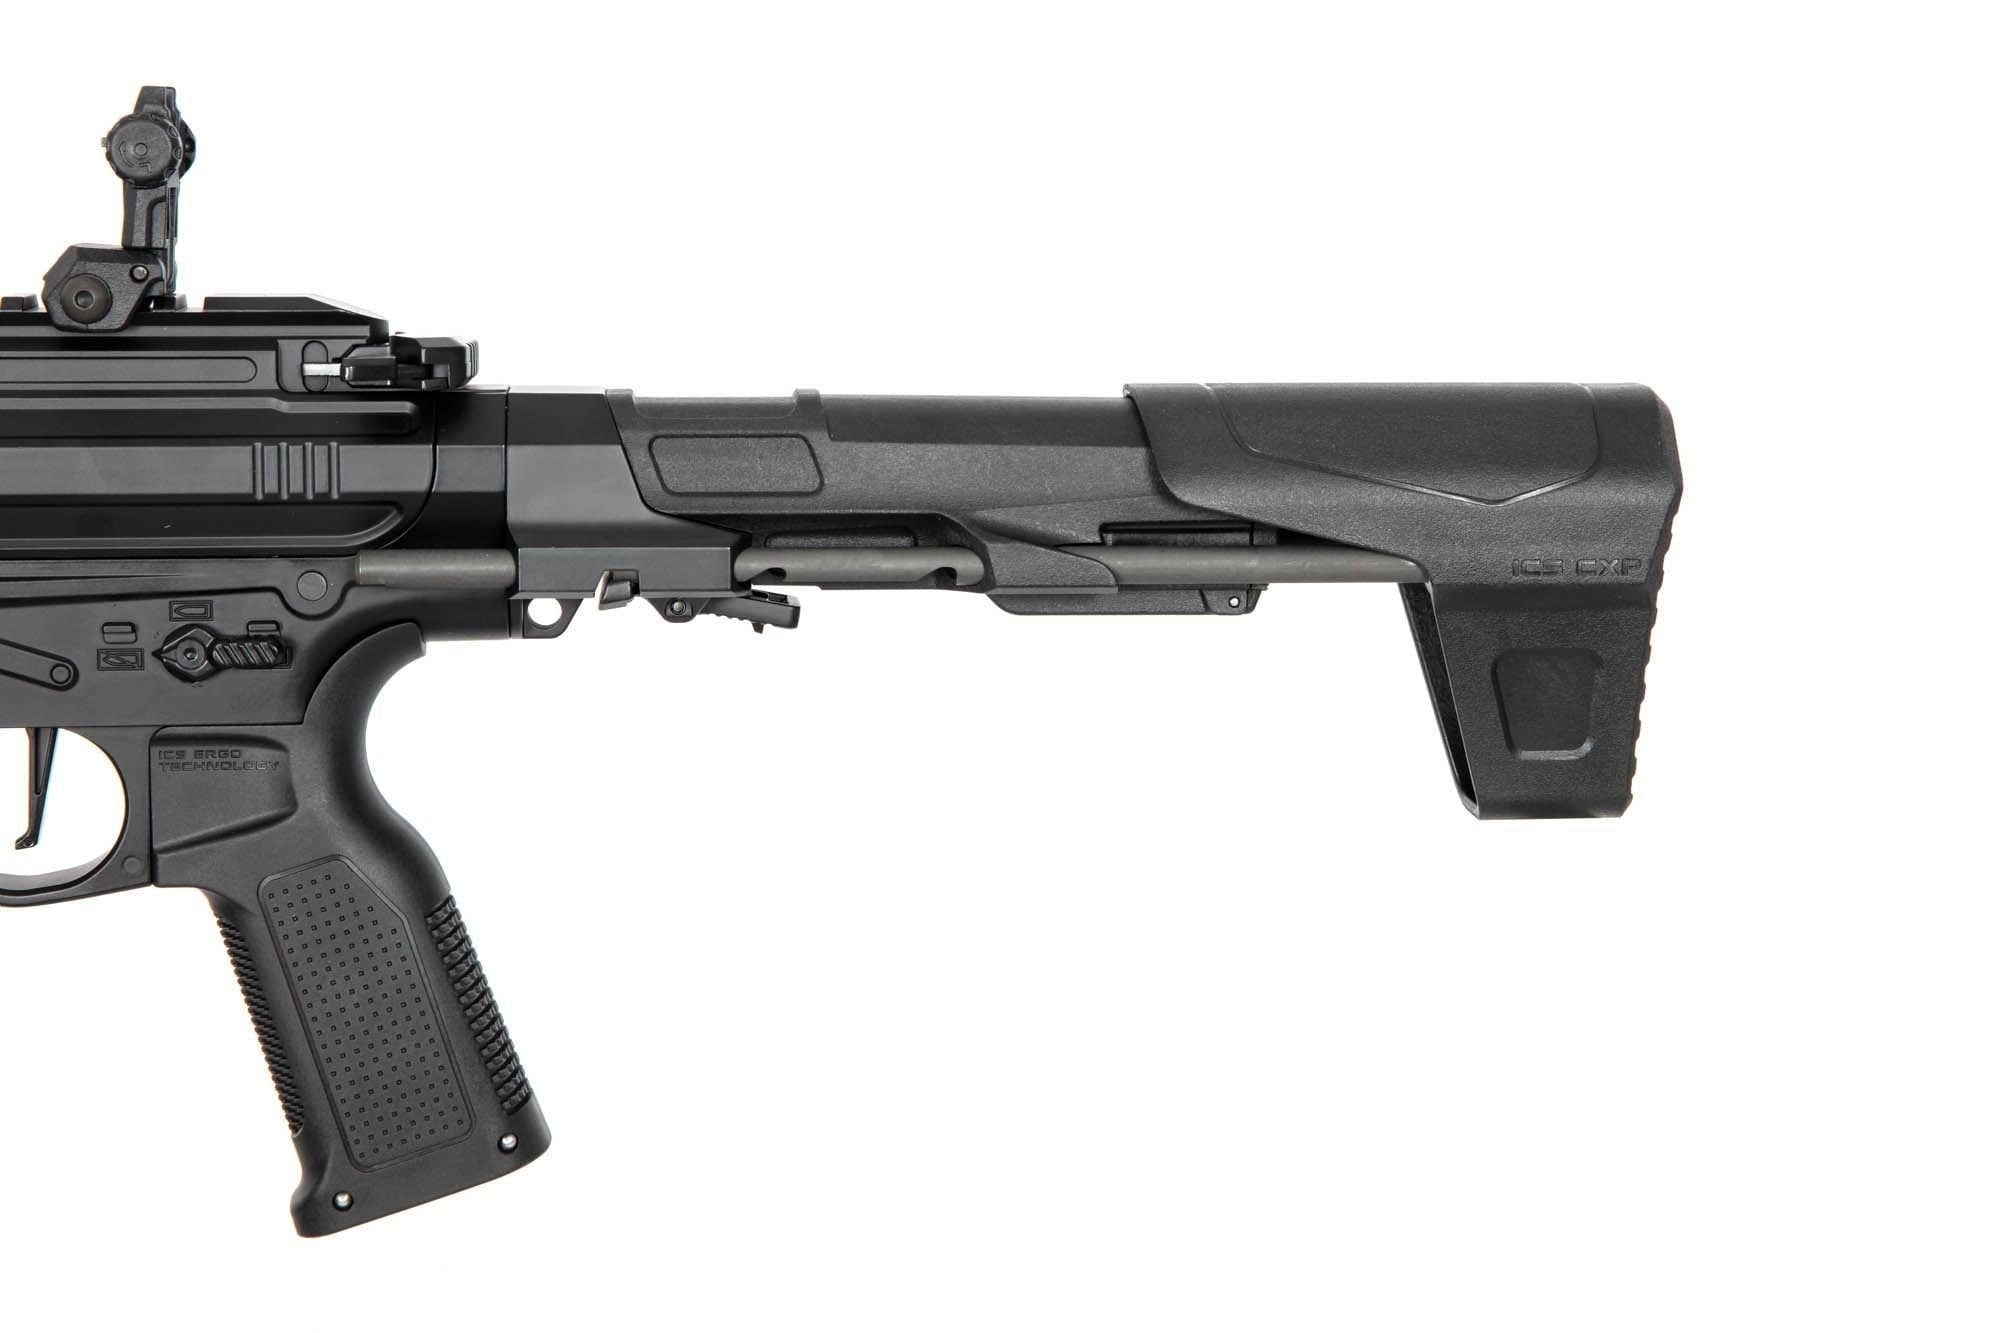 CXP-MARS PDW9 Submachine Gun - black